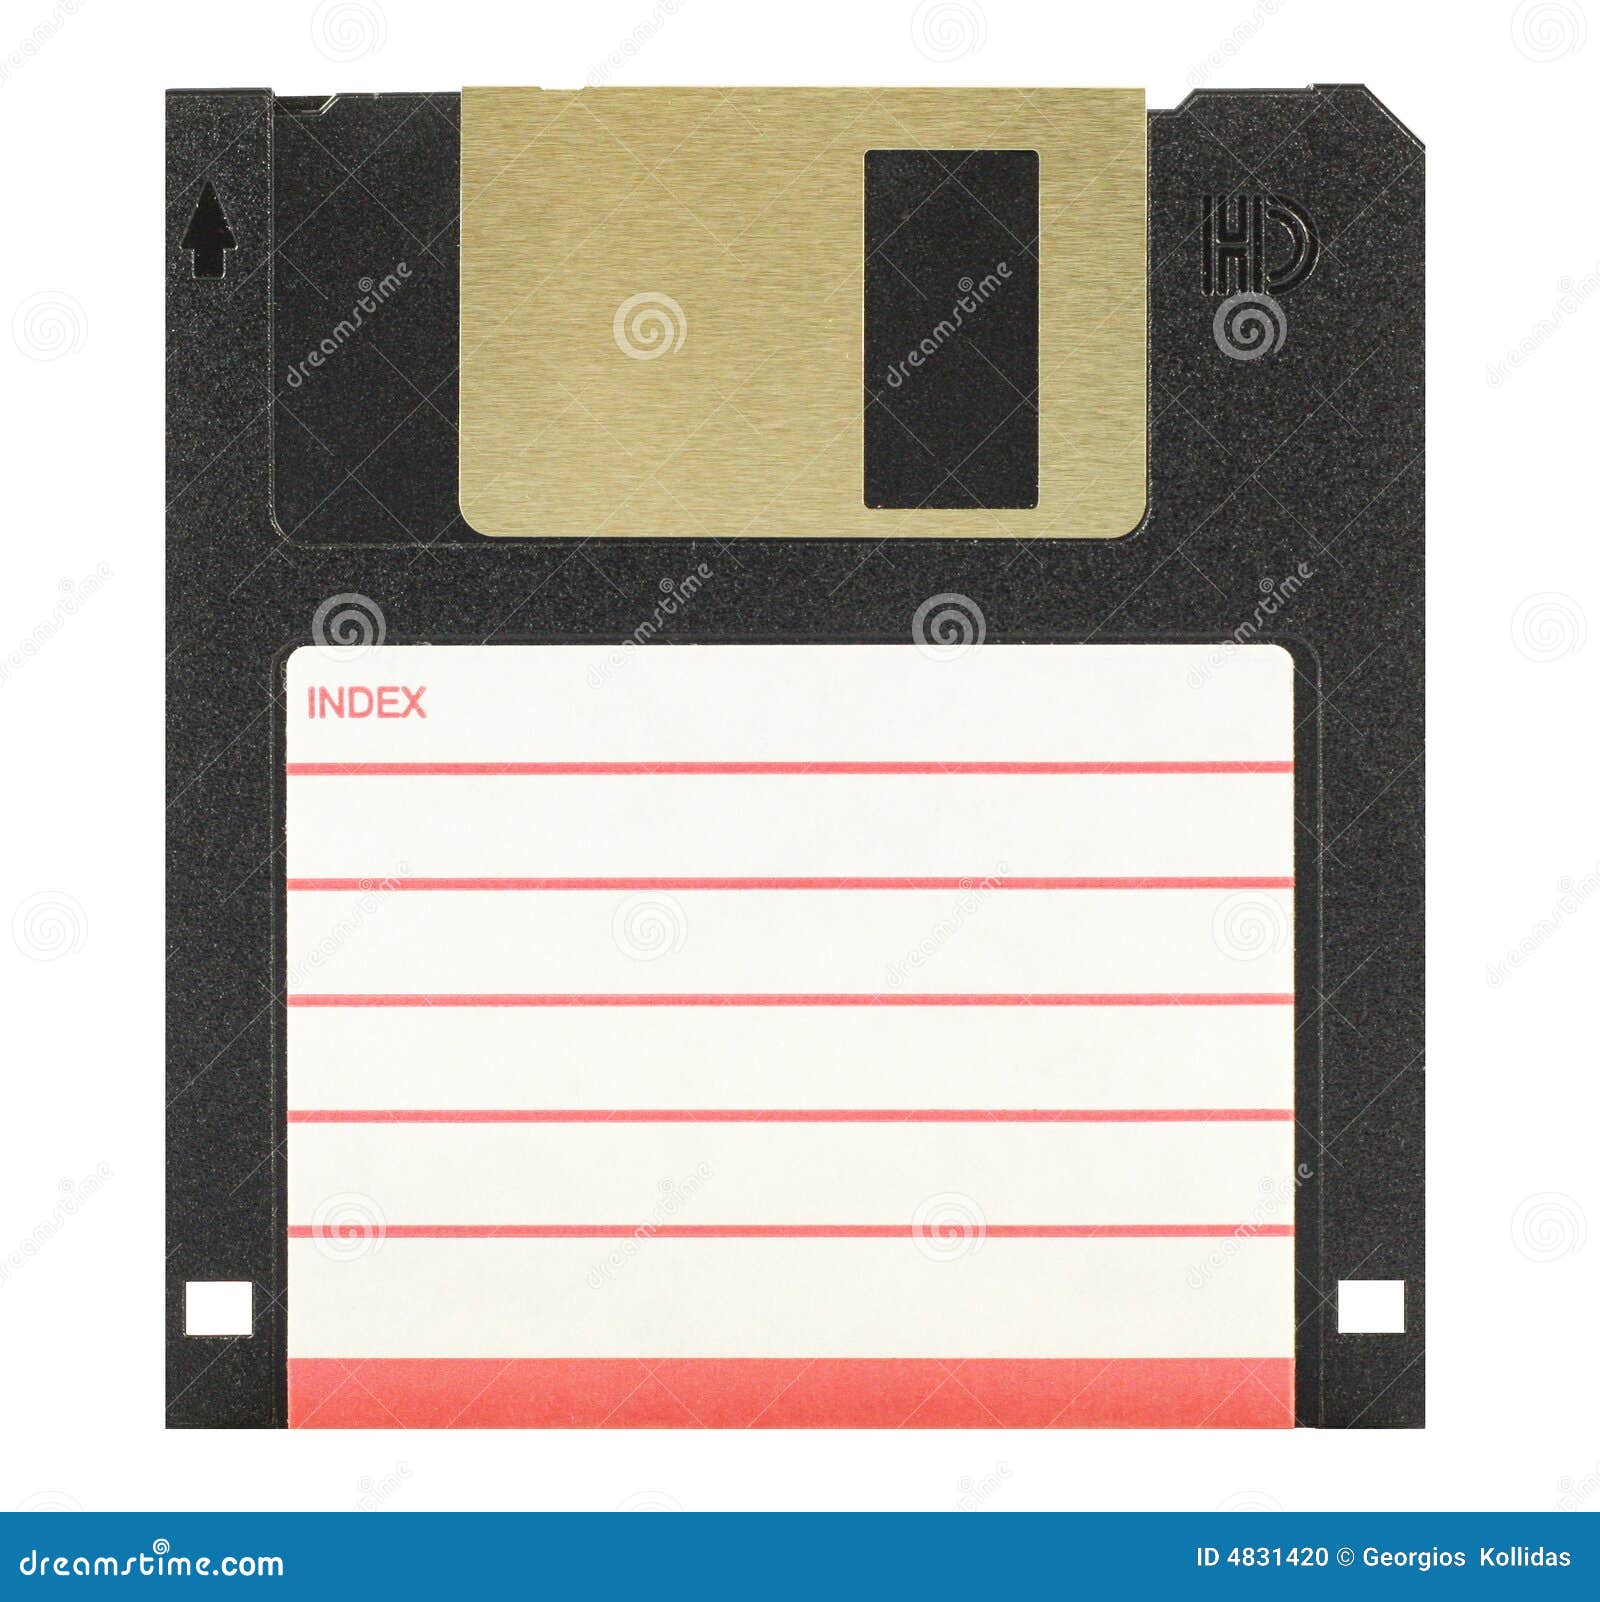 3.5'' inch floppy disk